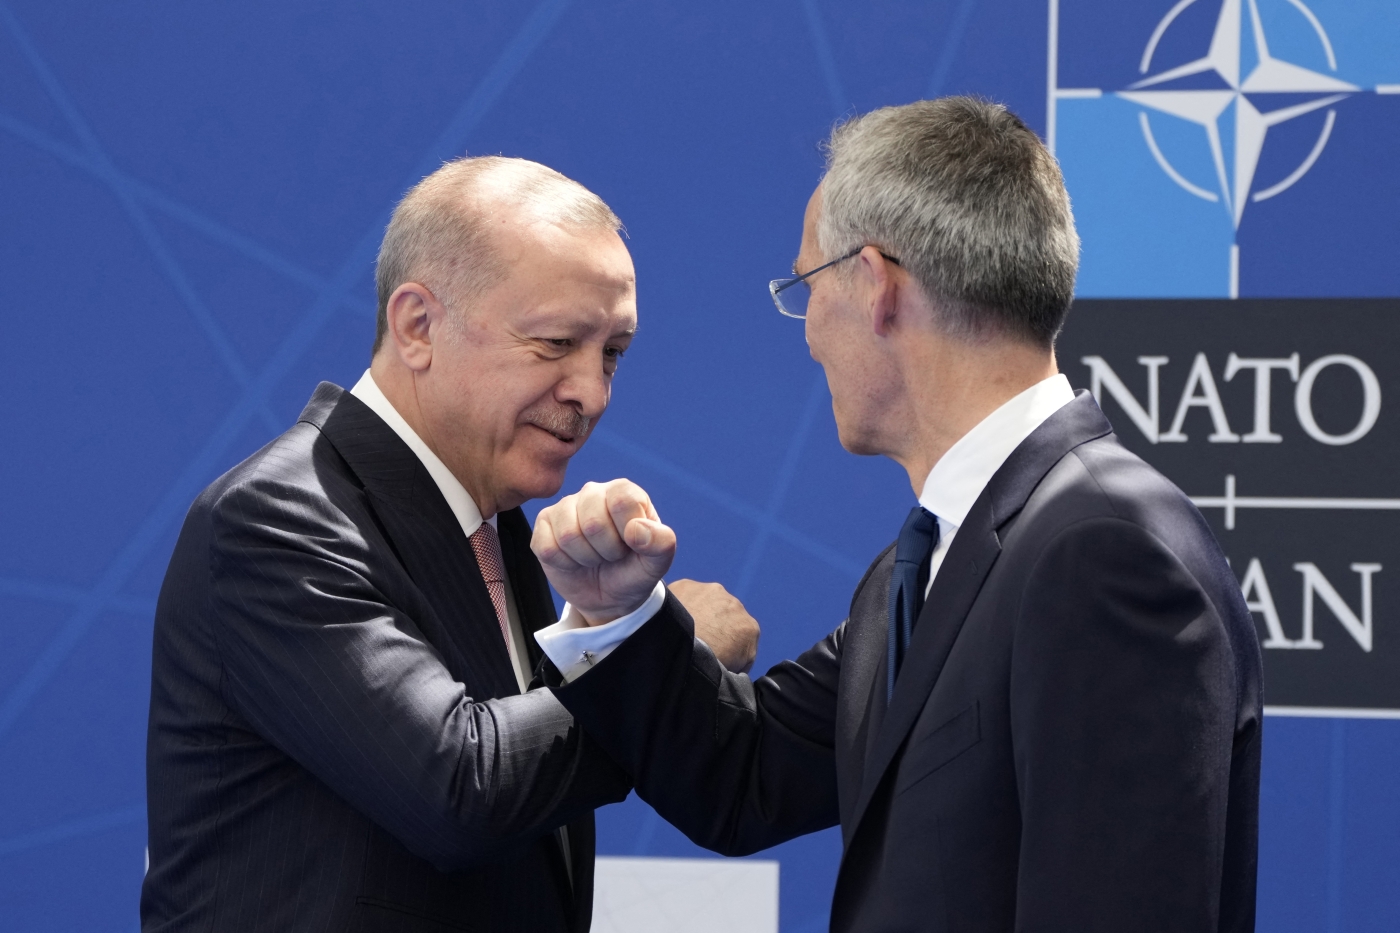 Jens Stoltenberg (R) greets Recep Tayyip Erdogan